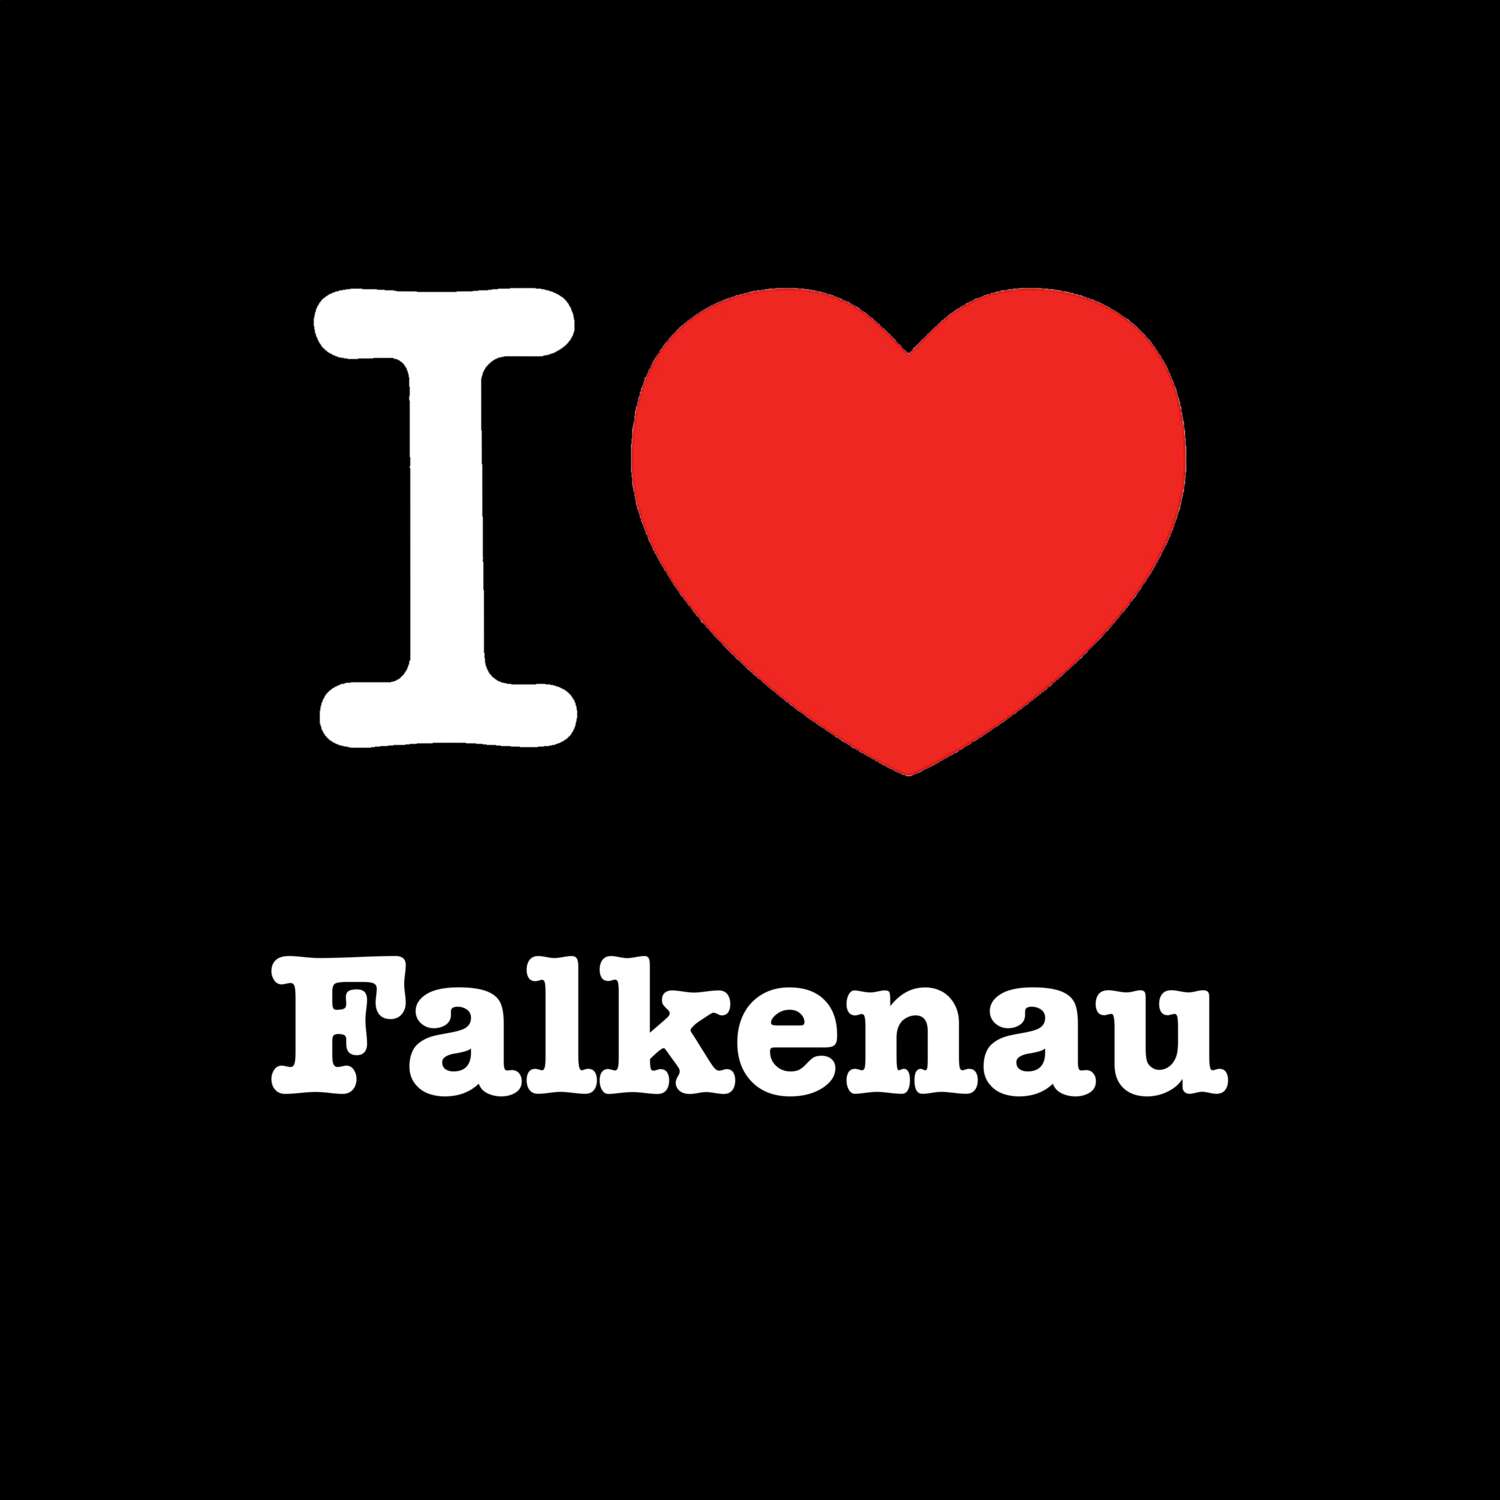 Falkenau T-Shirt »I love«